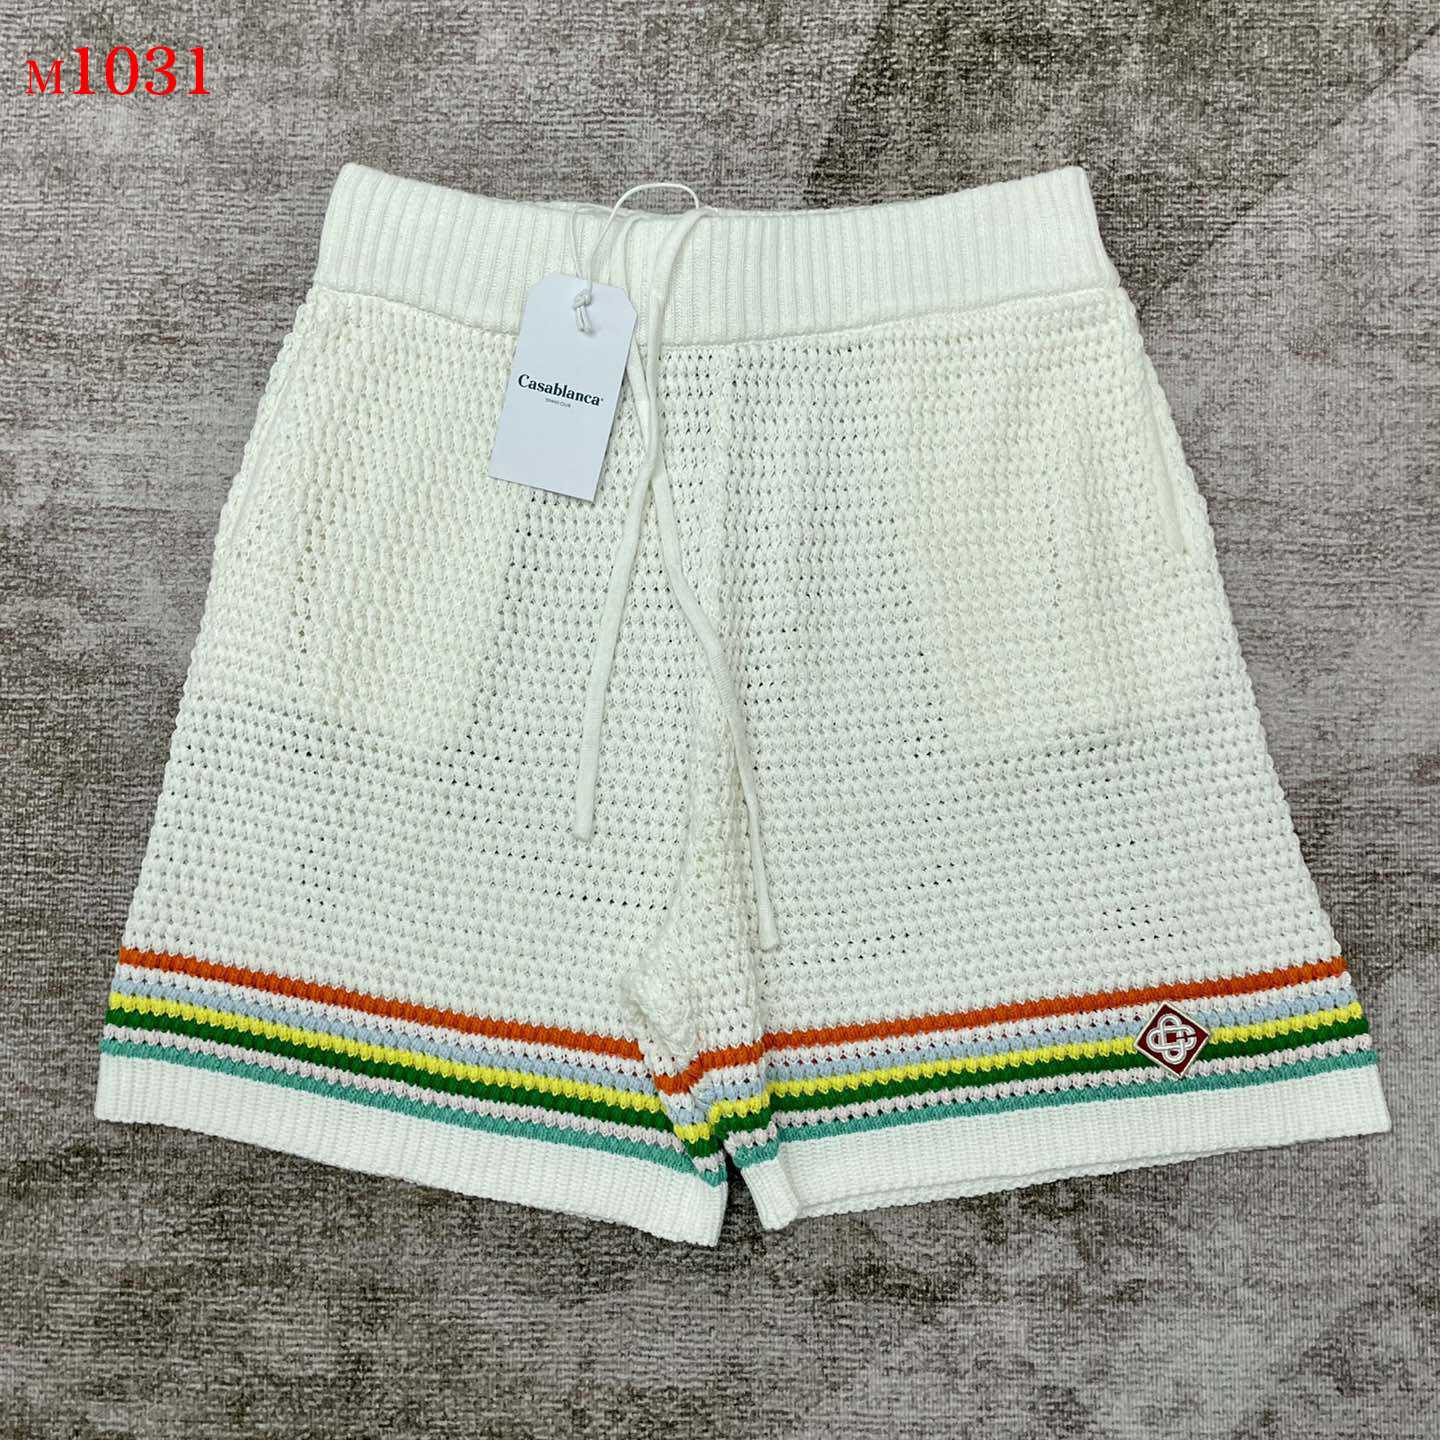 Casablanca Tennis crochet-knit Shorts    m1031 - DesignerGu